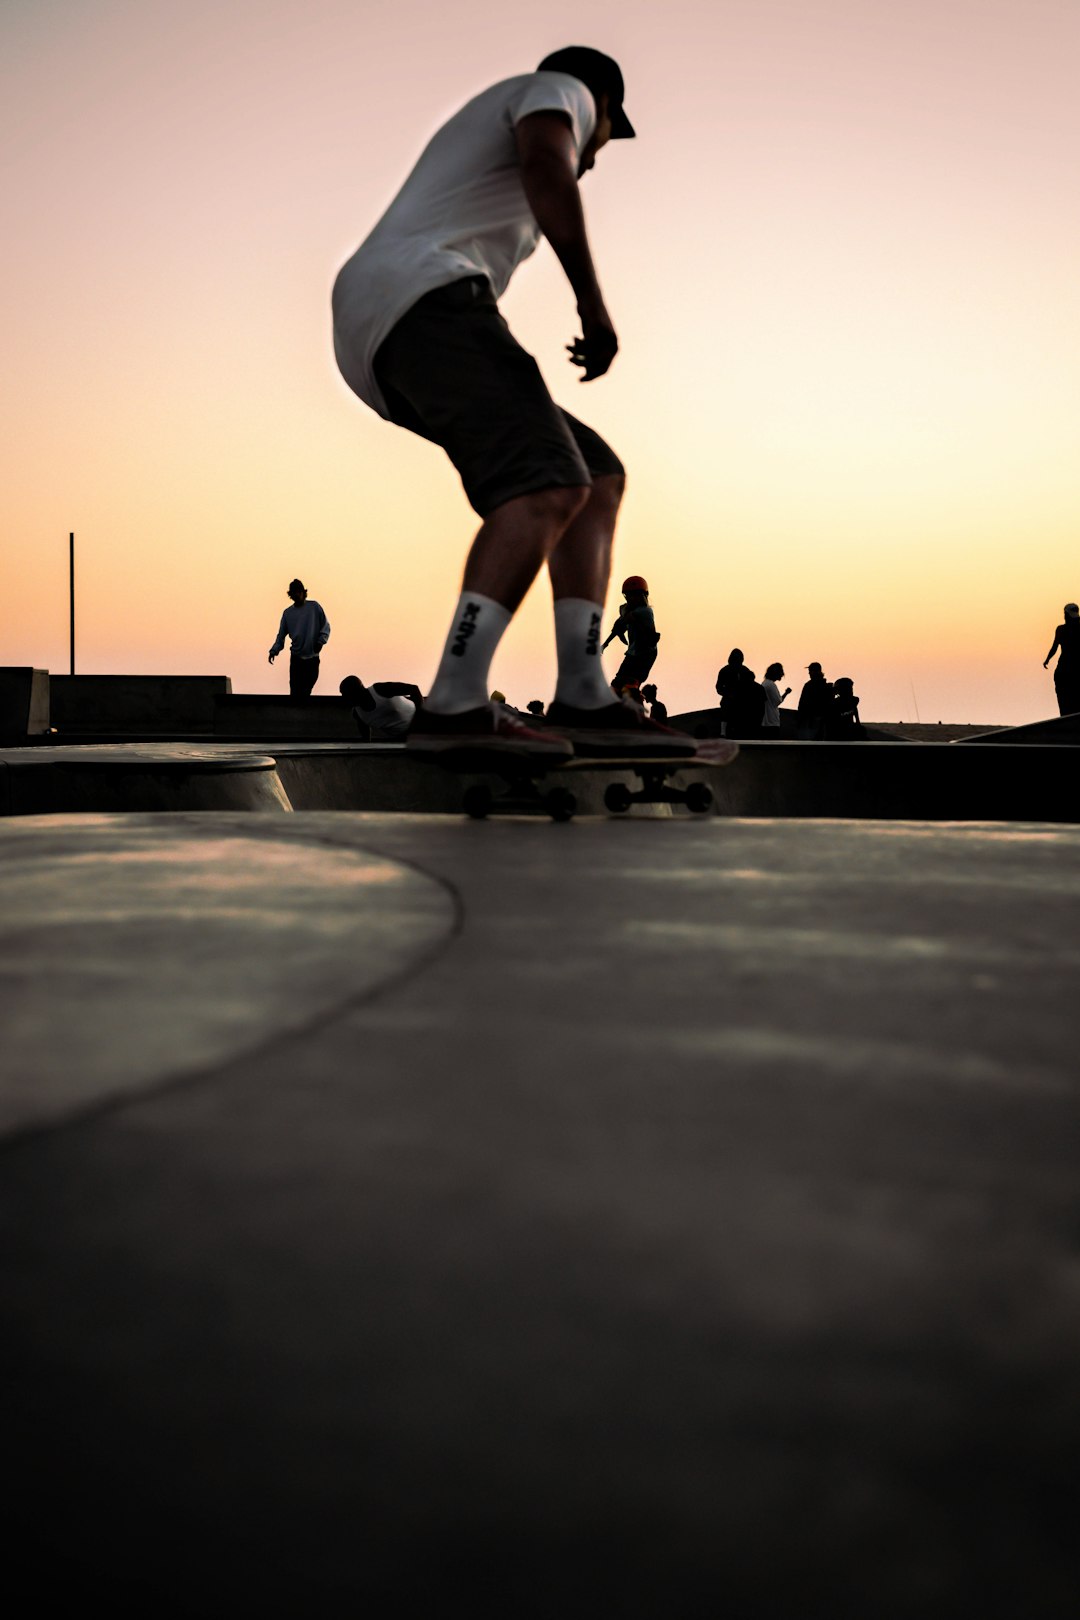 man in black shirt and pants doing skateboard stunts